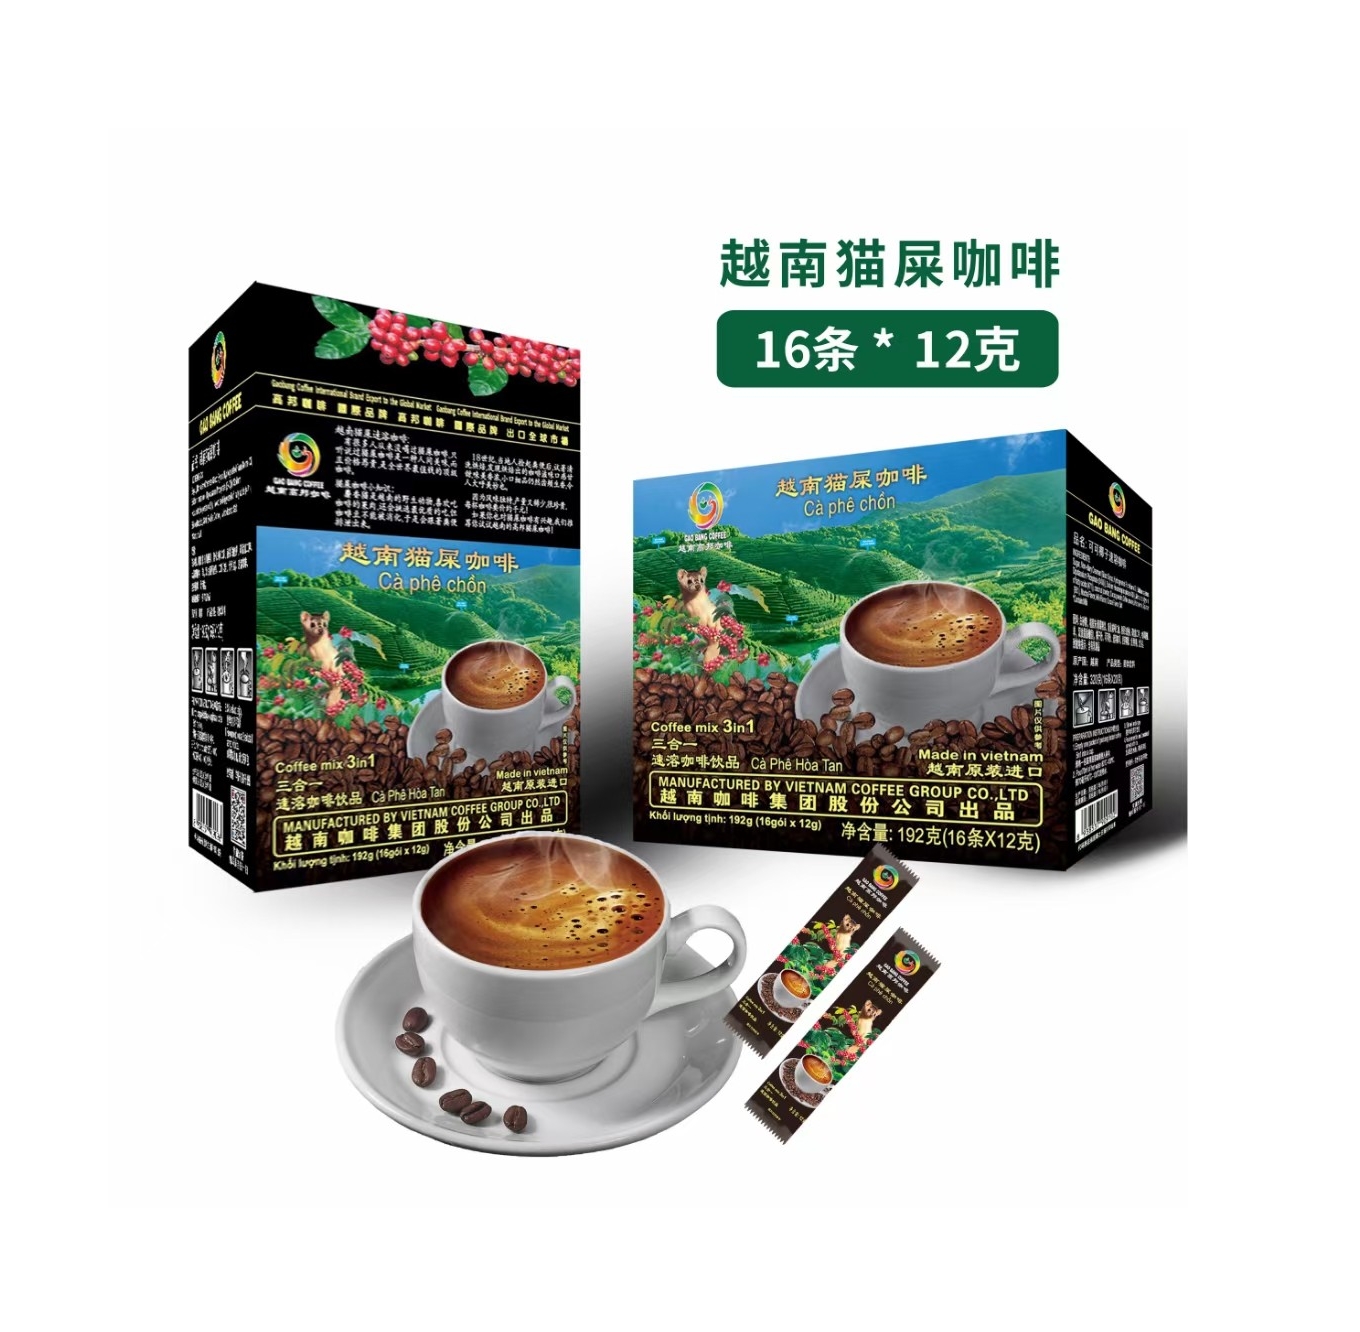 Best Seller Manufacture Supplying the Instant Coffee Powder Gaobang 3in1 Coffee Instant Powder 12gram Vietnam